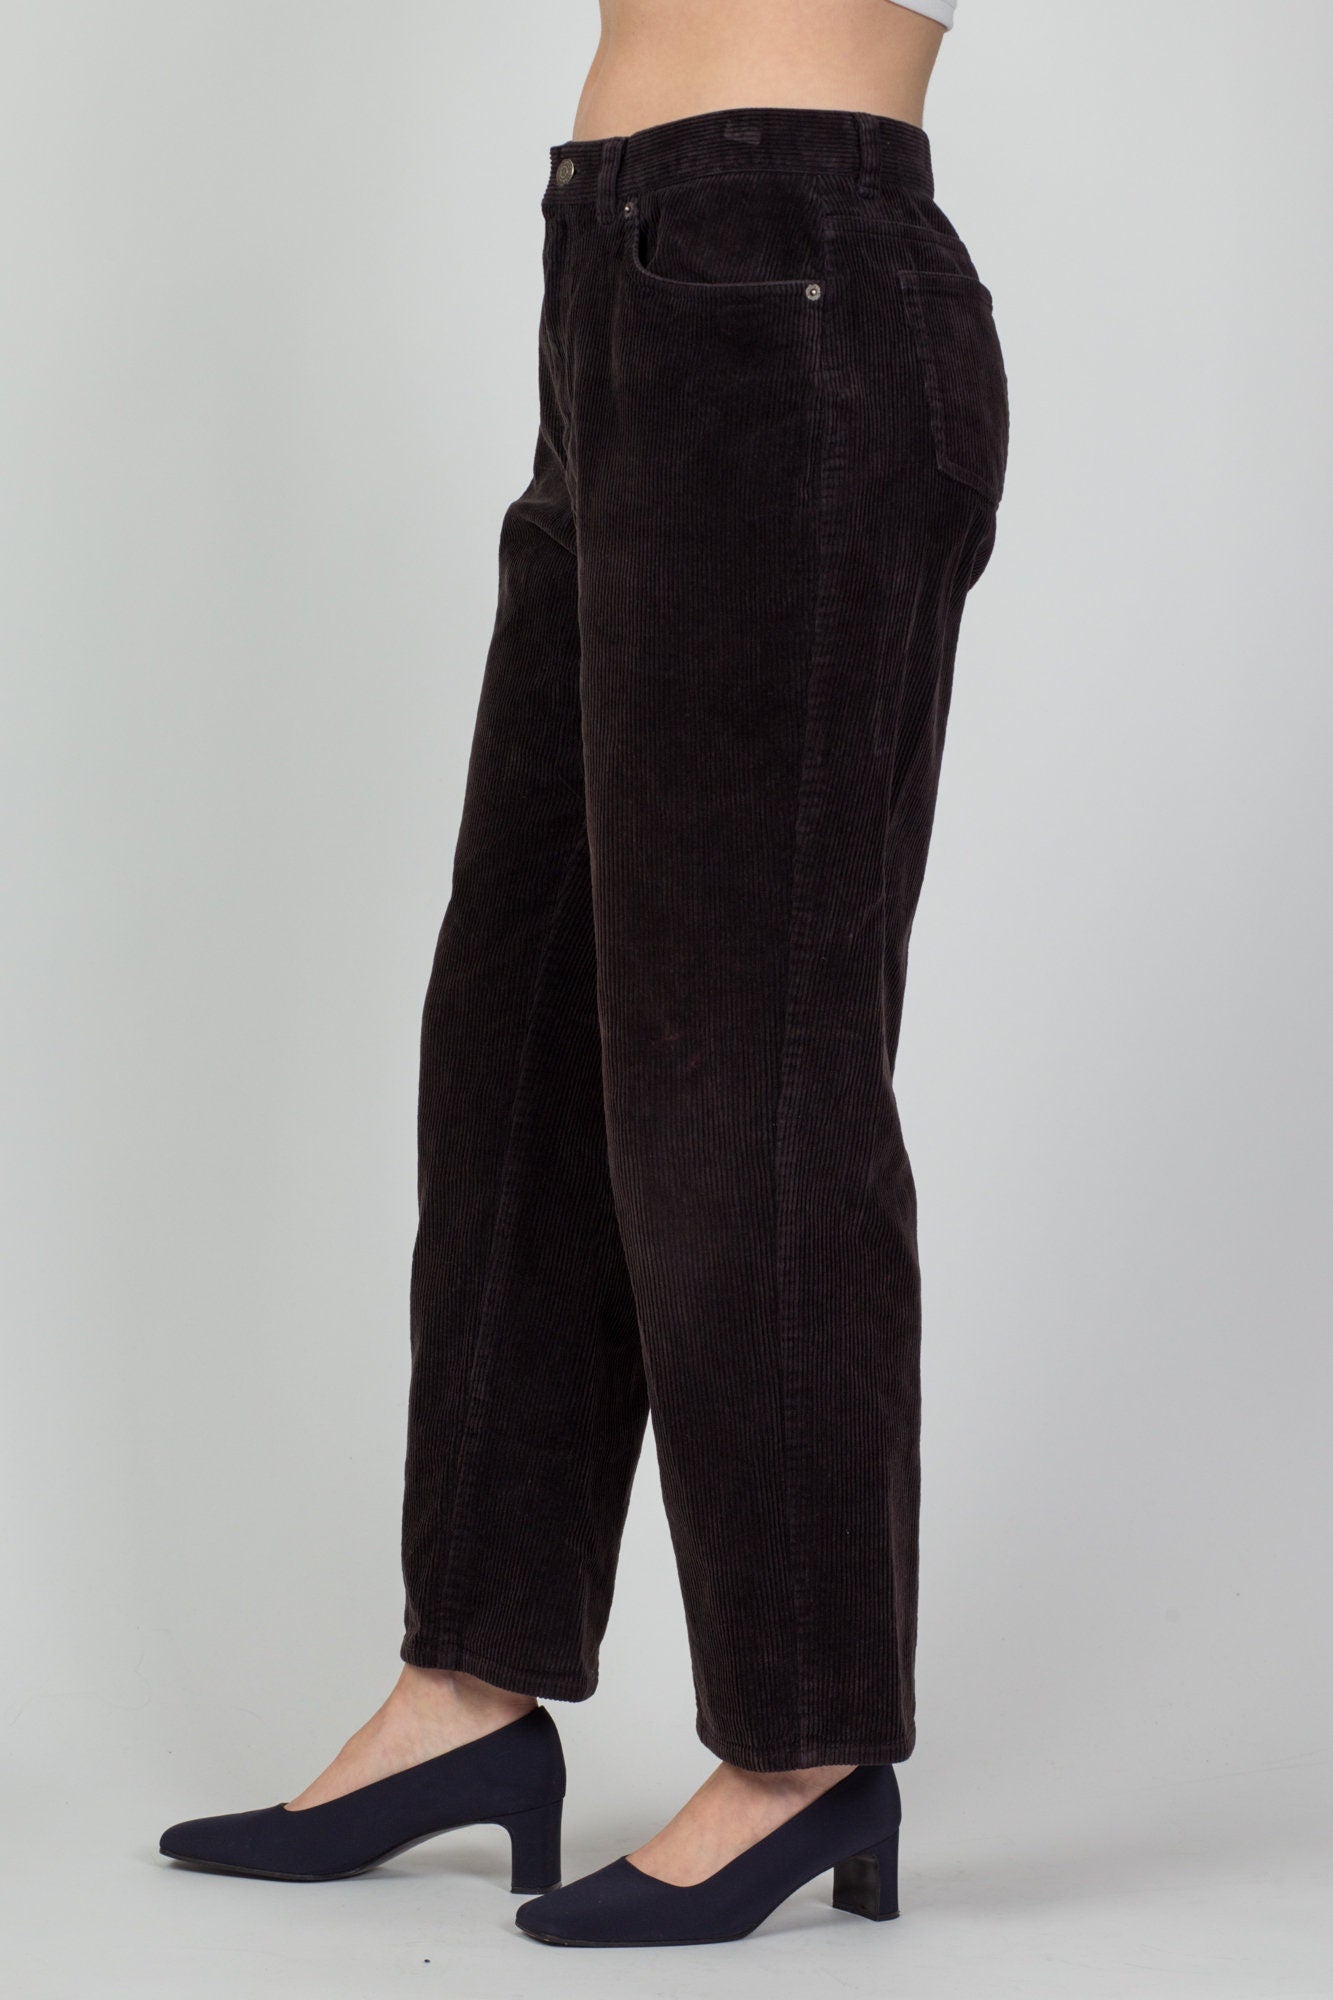 Vintage Women's 80's Black Pants High Waisted